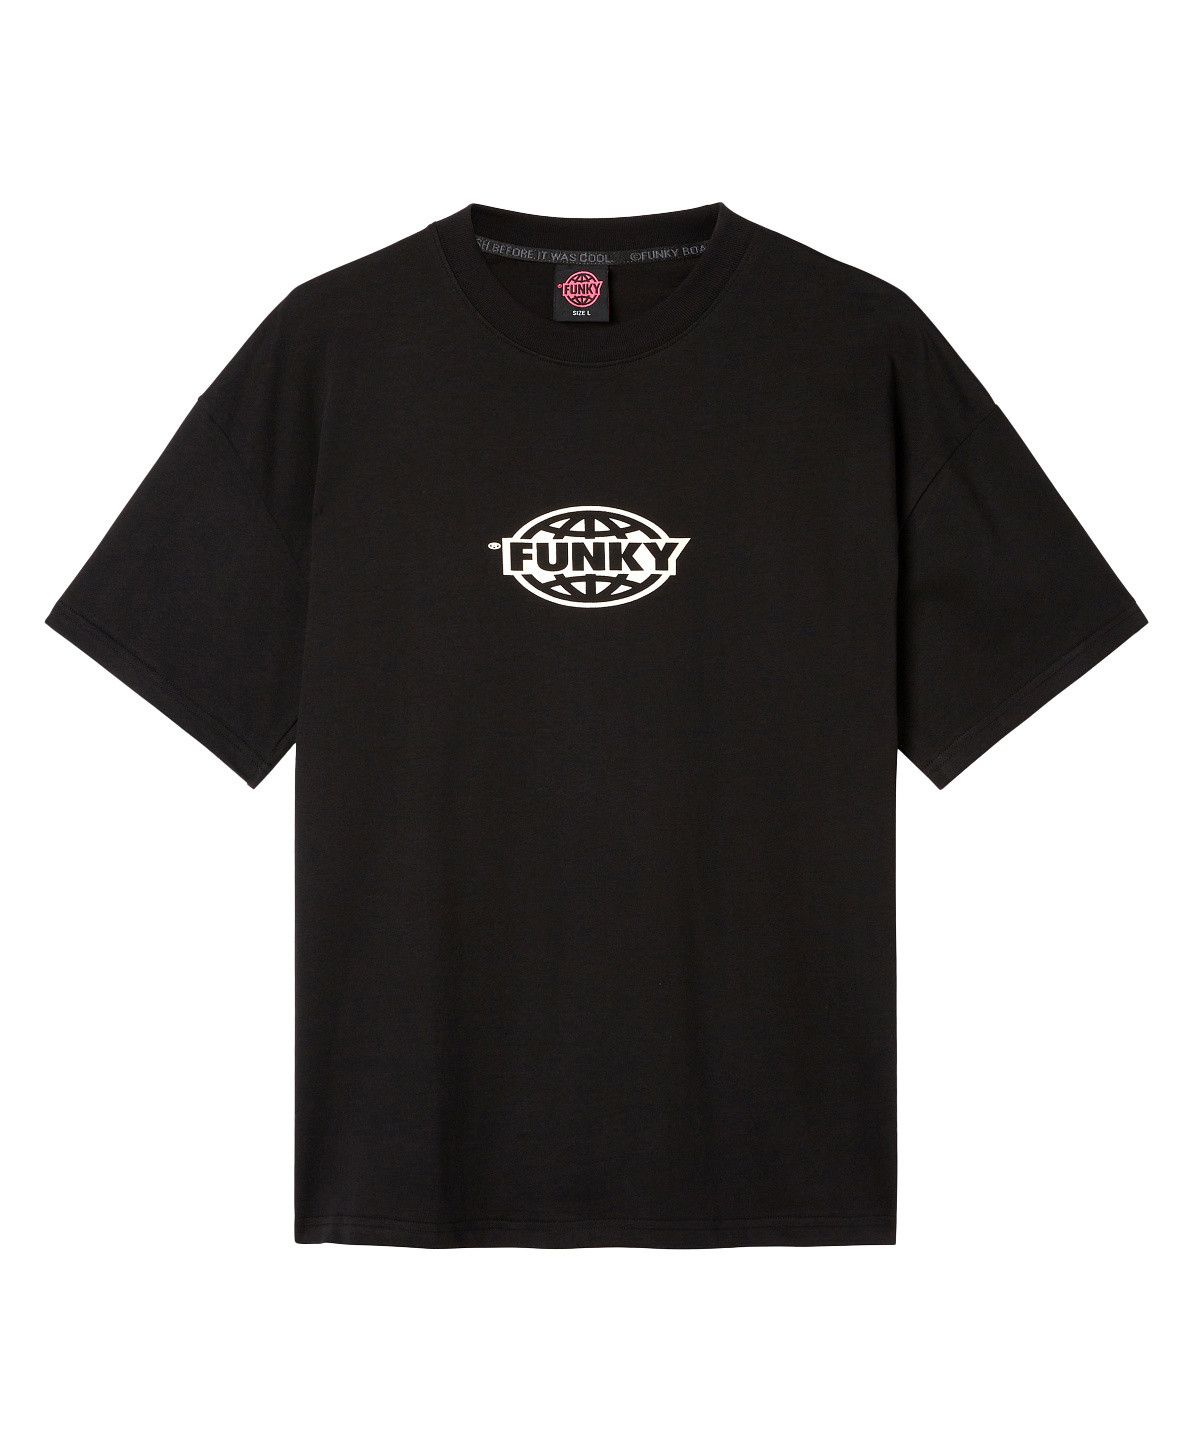 Funky - T-shirt girocollo con logo ovale, Nero, large image number 0